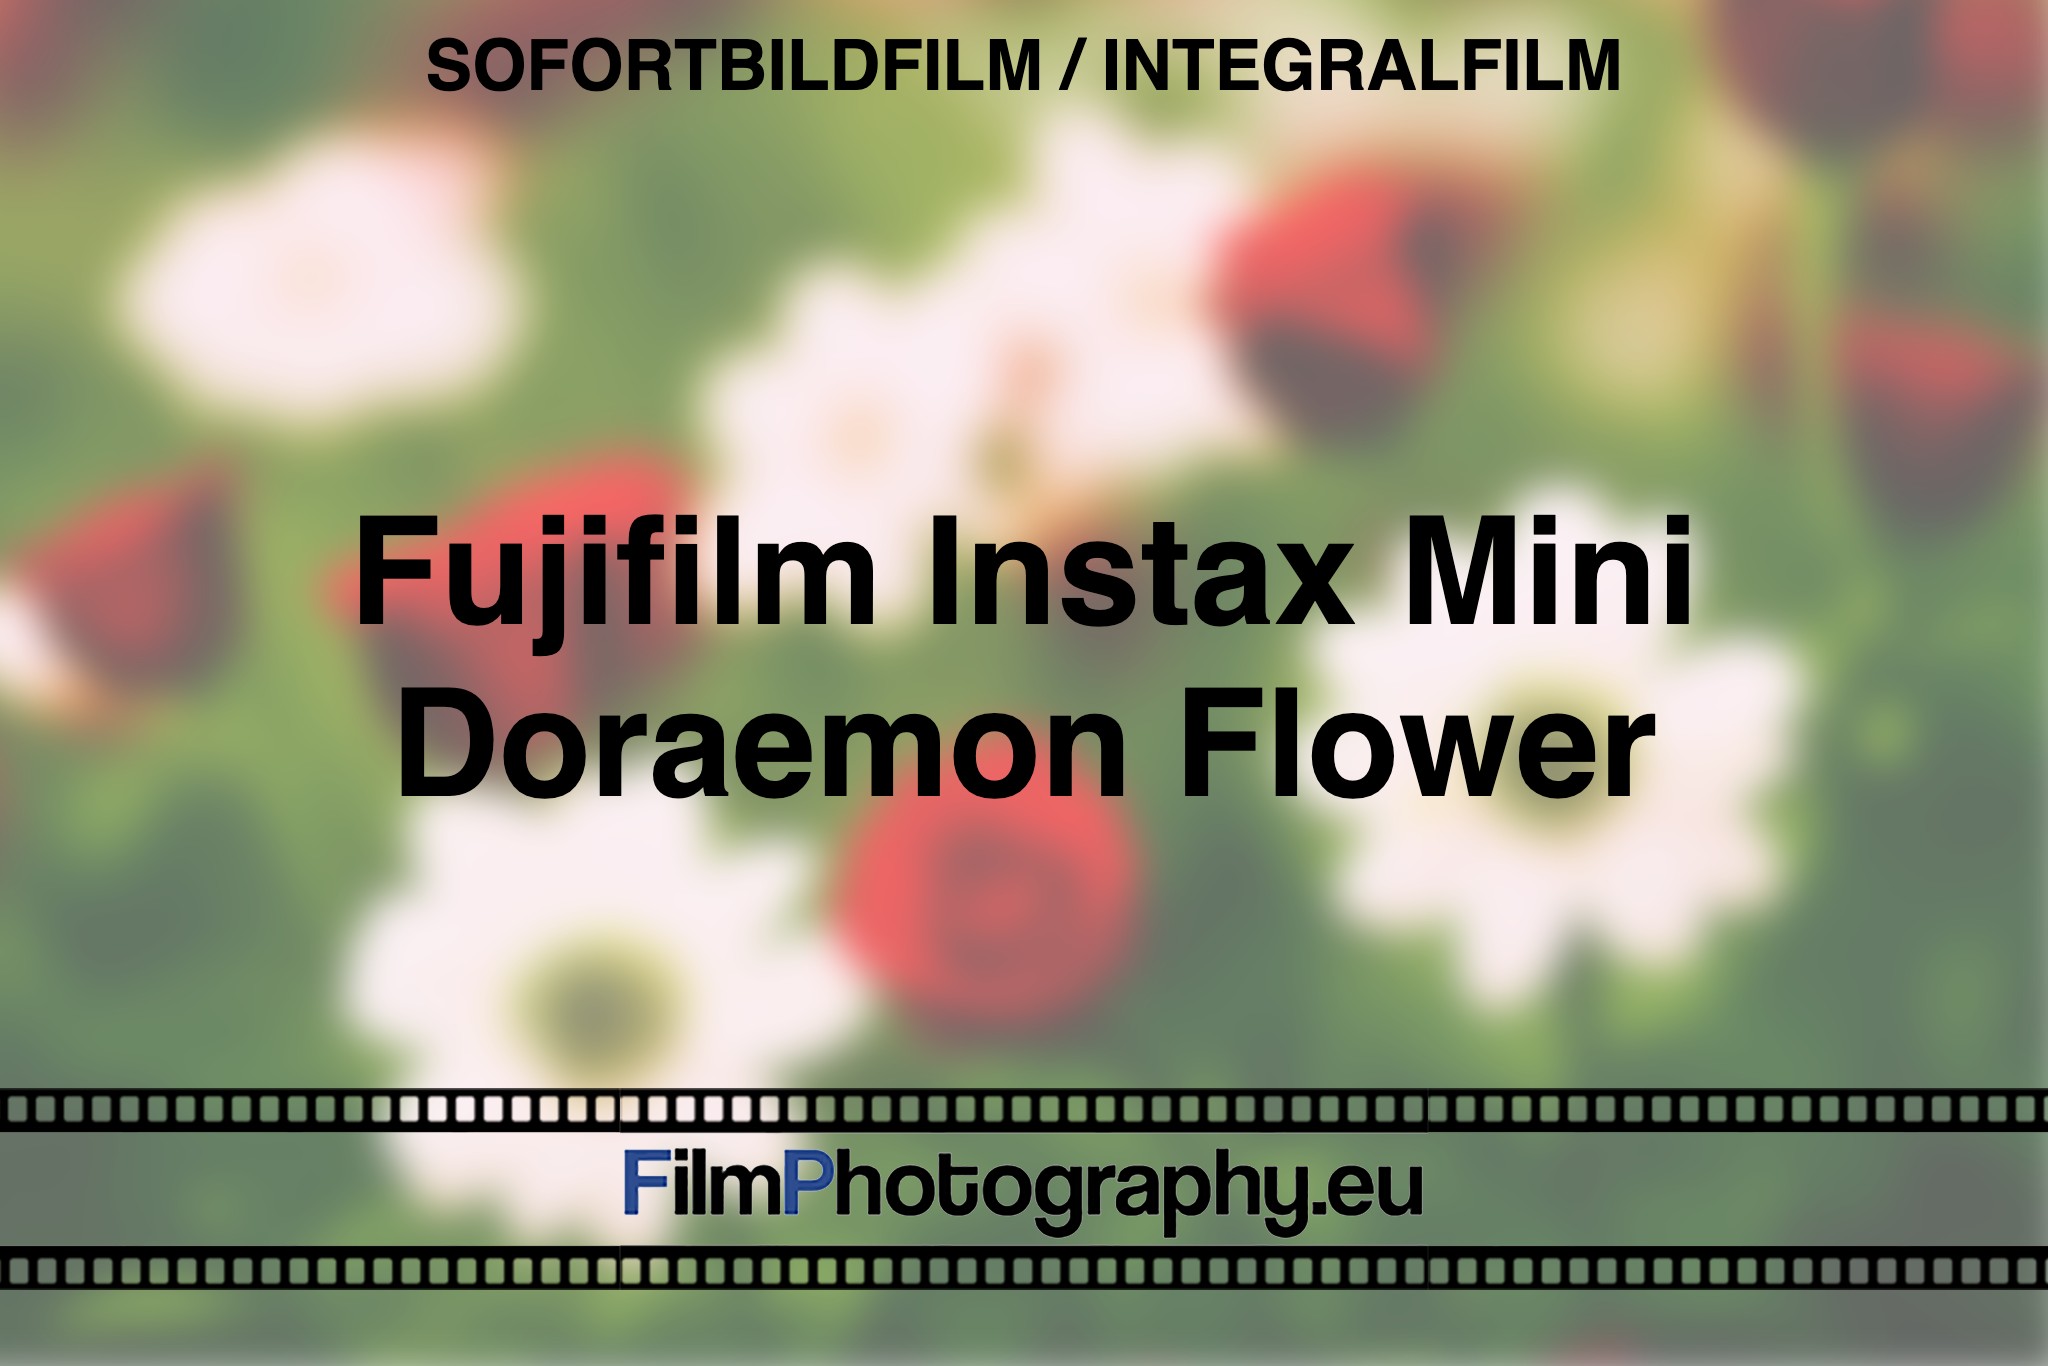 fujifilm-instax-mini-doraemon-flower-sofortbildfilm-integralfilm-fp-bnv